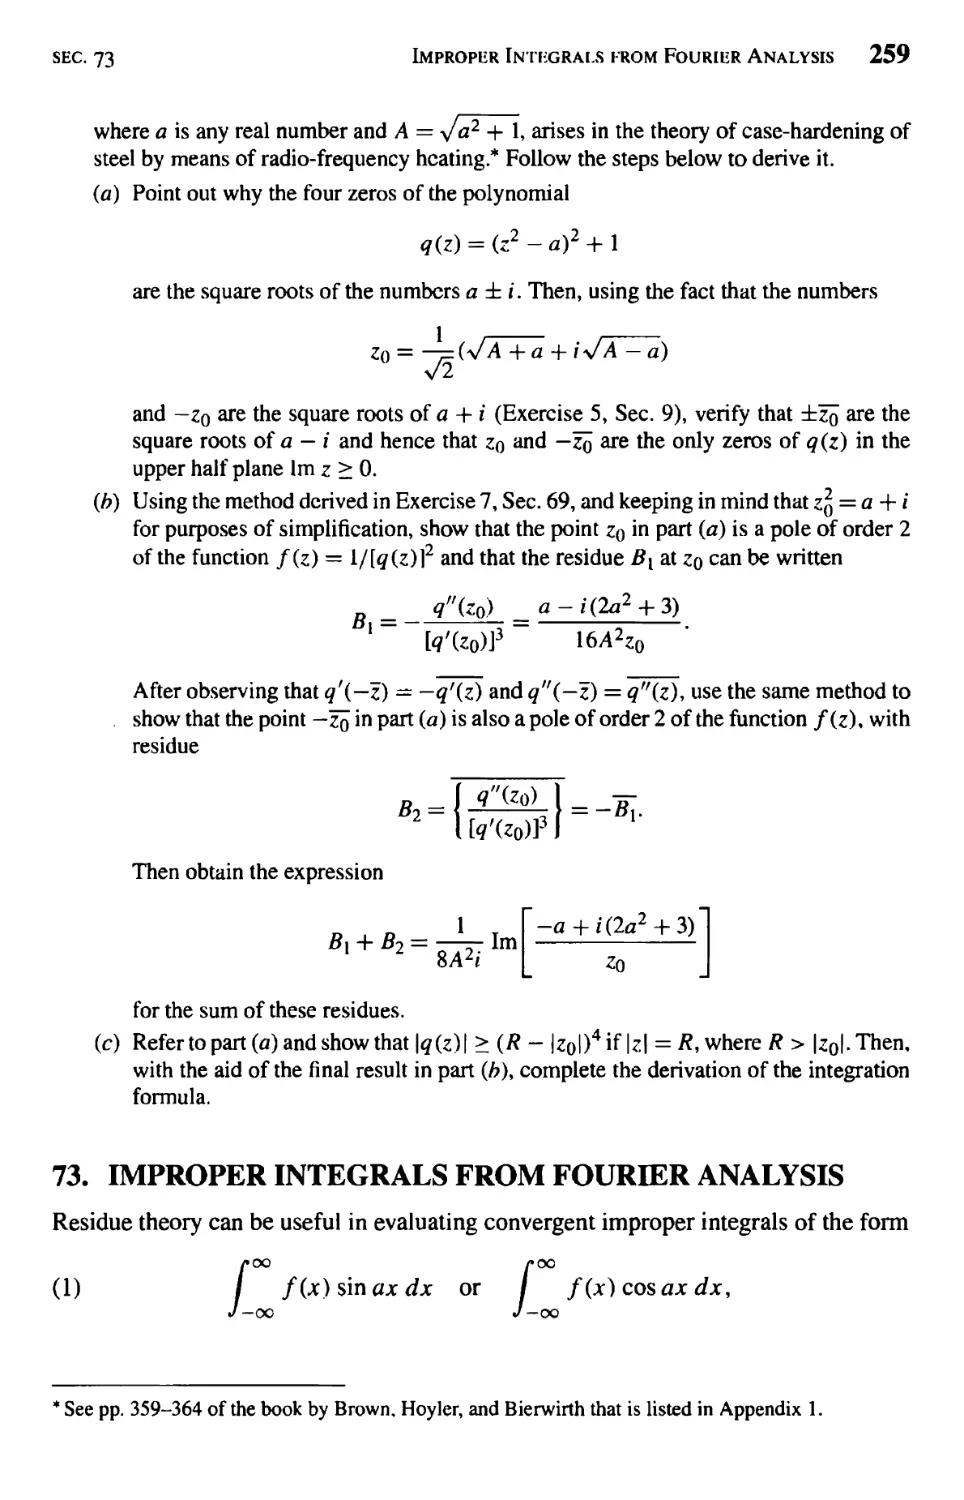 Improper Integrals from Fourier Analysis